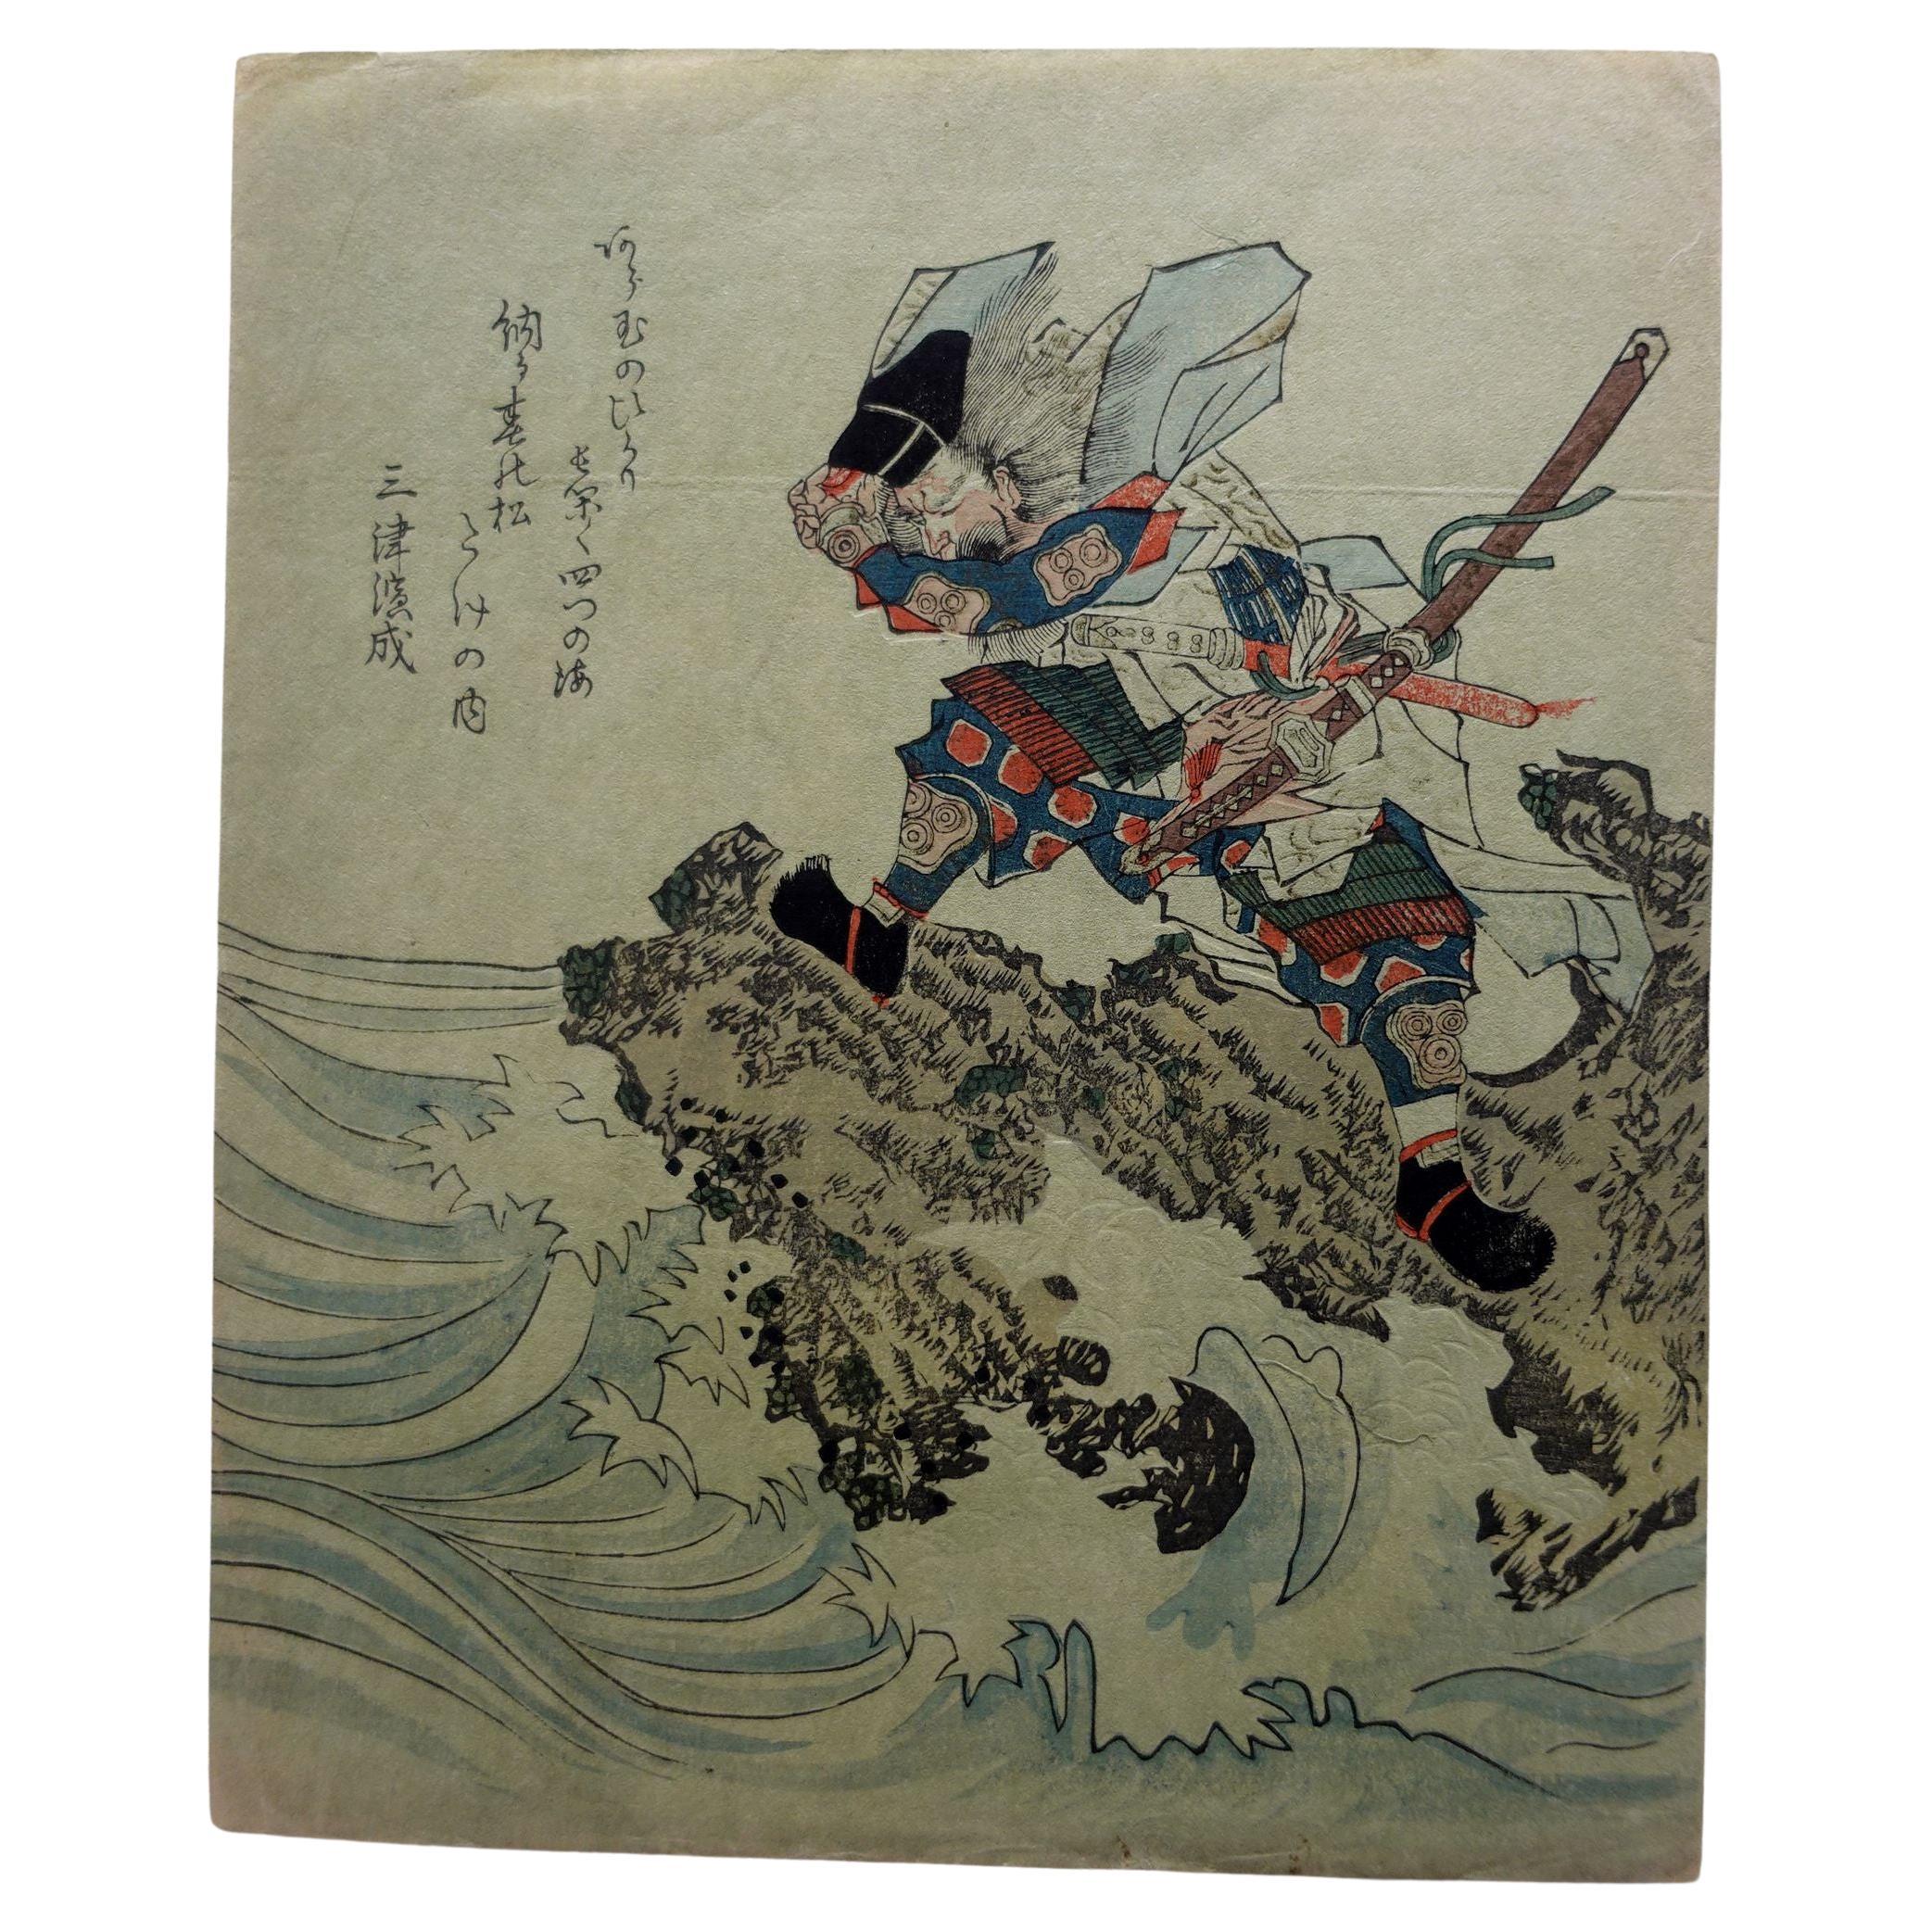 Japanese Woodblock Print by Yanagawa Shigenobu 柳川重信 '1880 version"